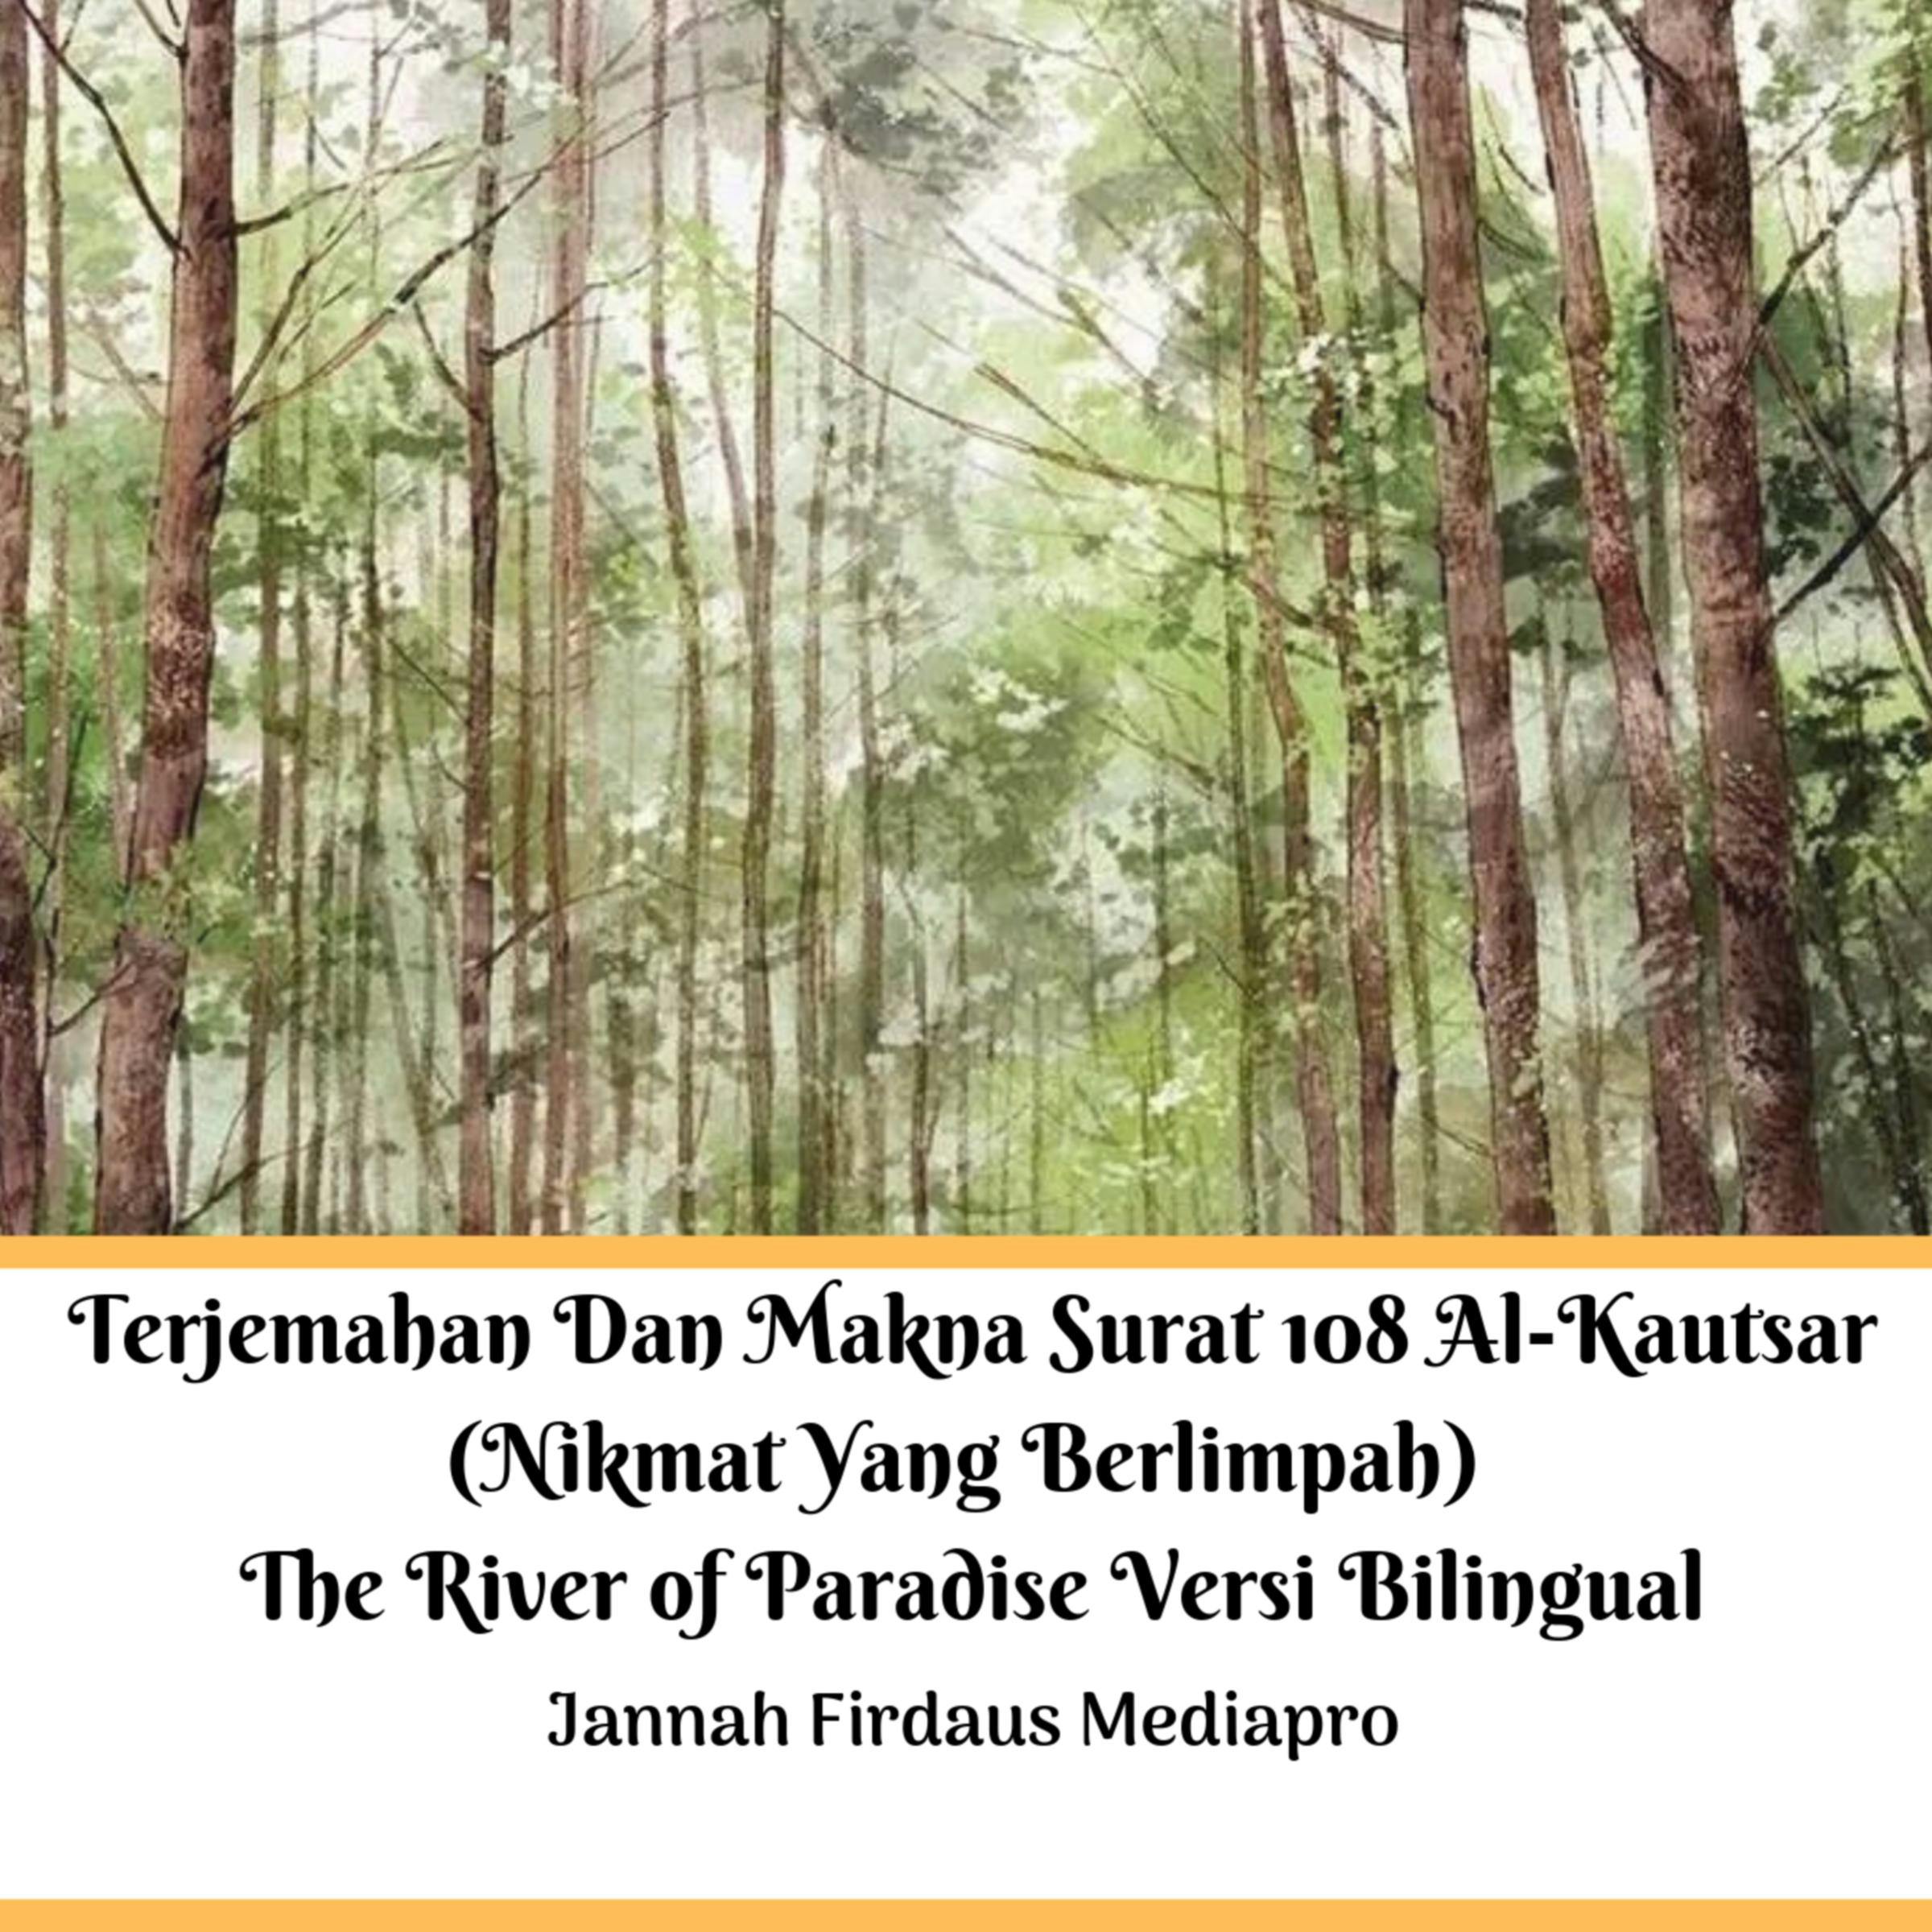 The River of Paradise Versi Bilingual - Jannah Firdaus Mediapro